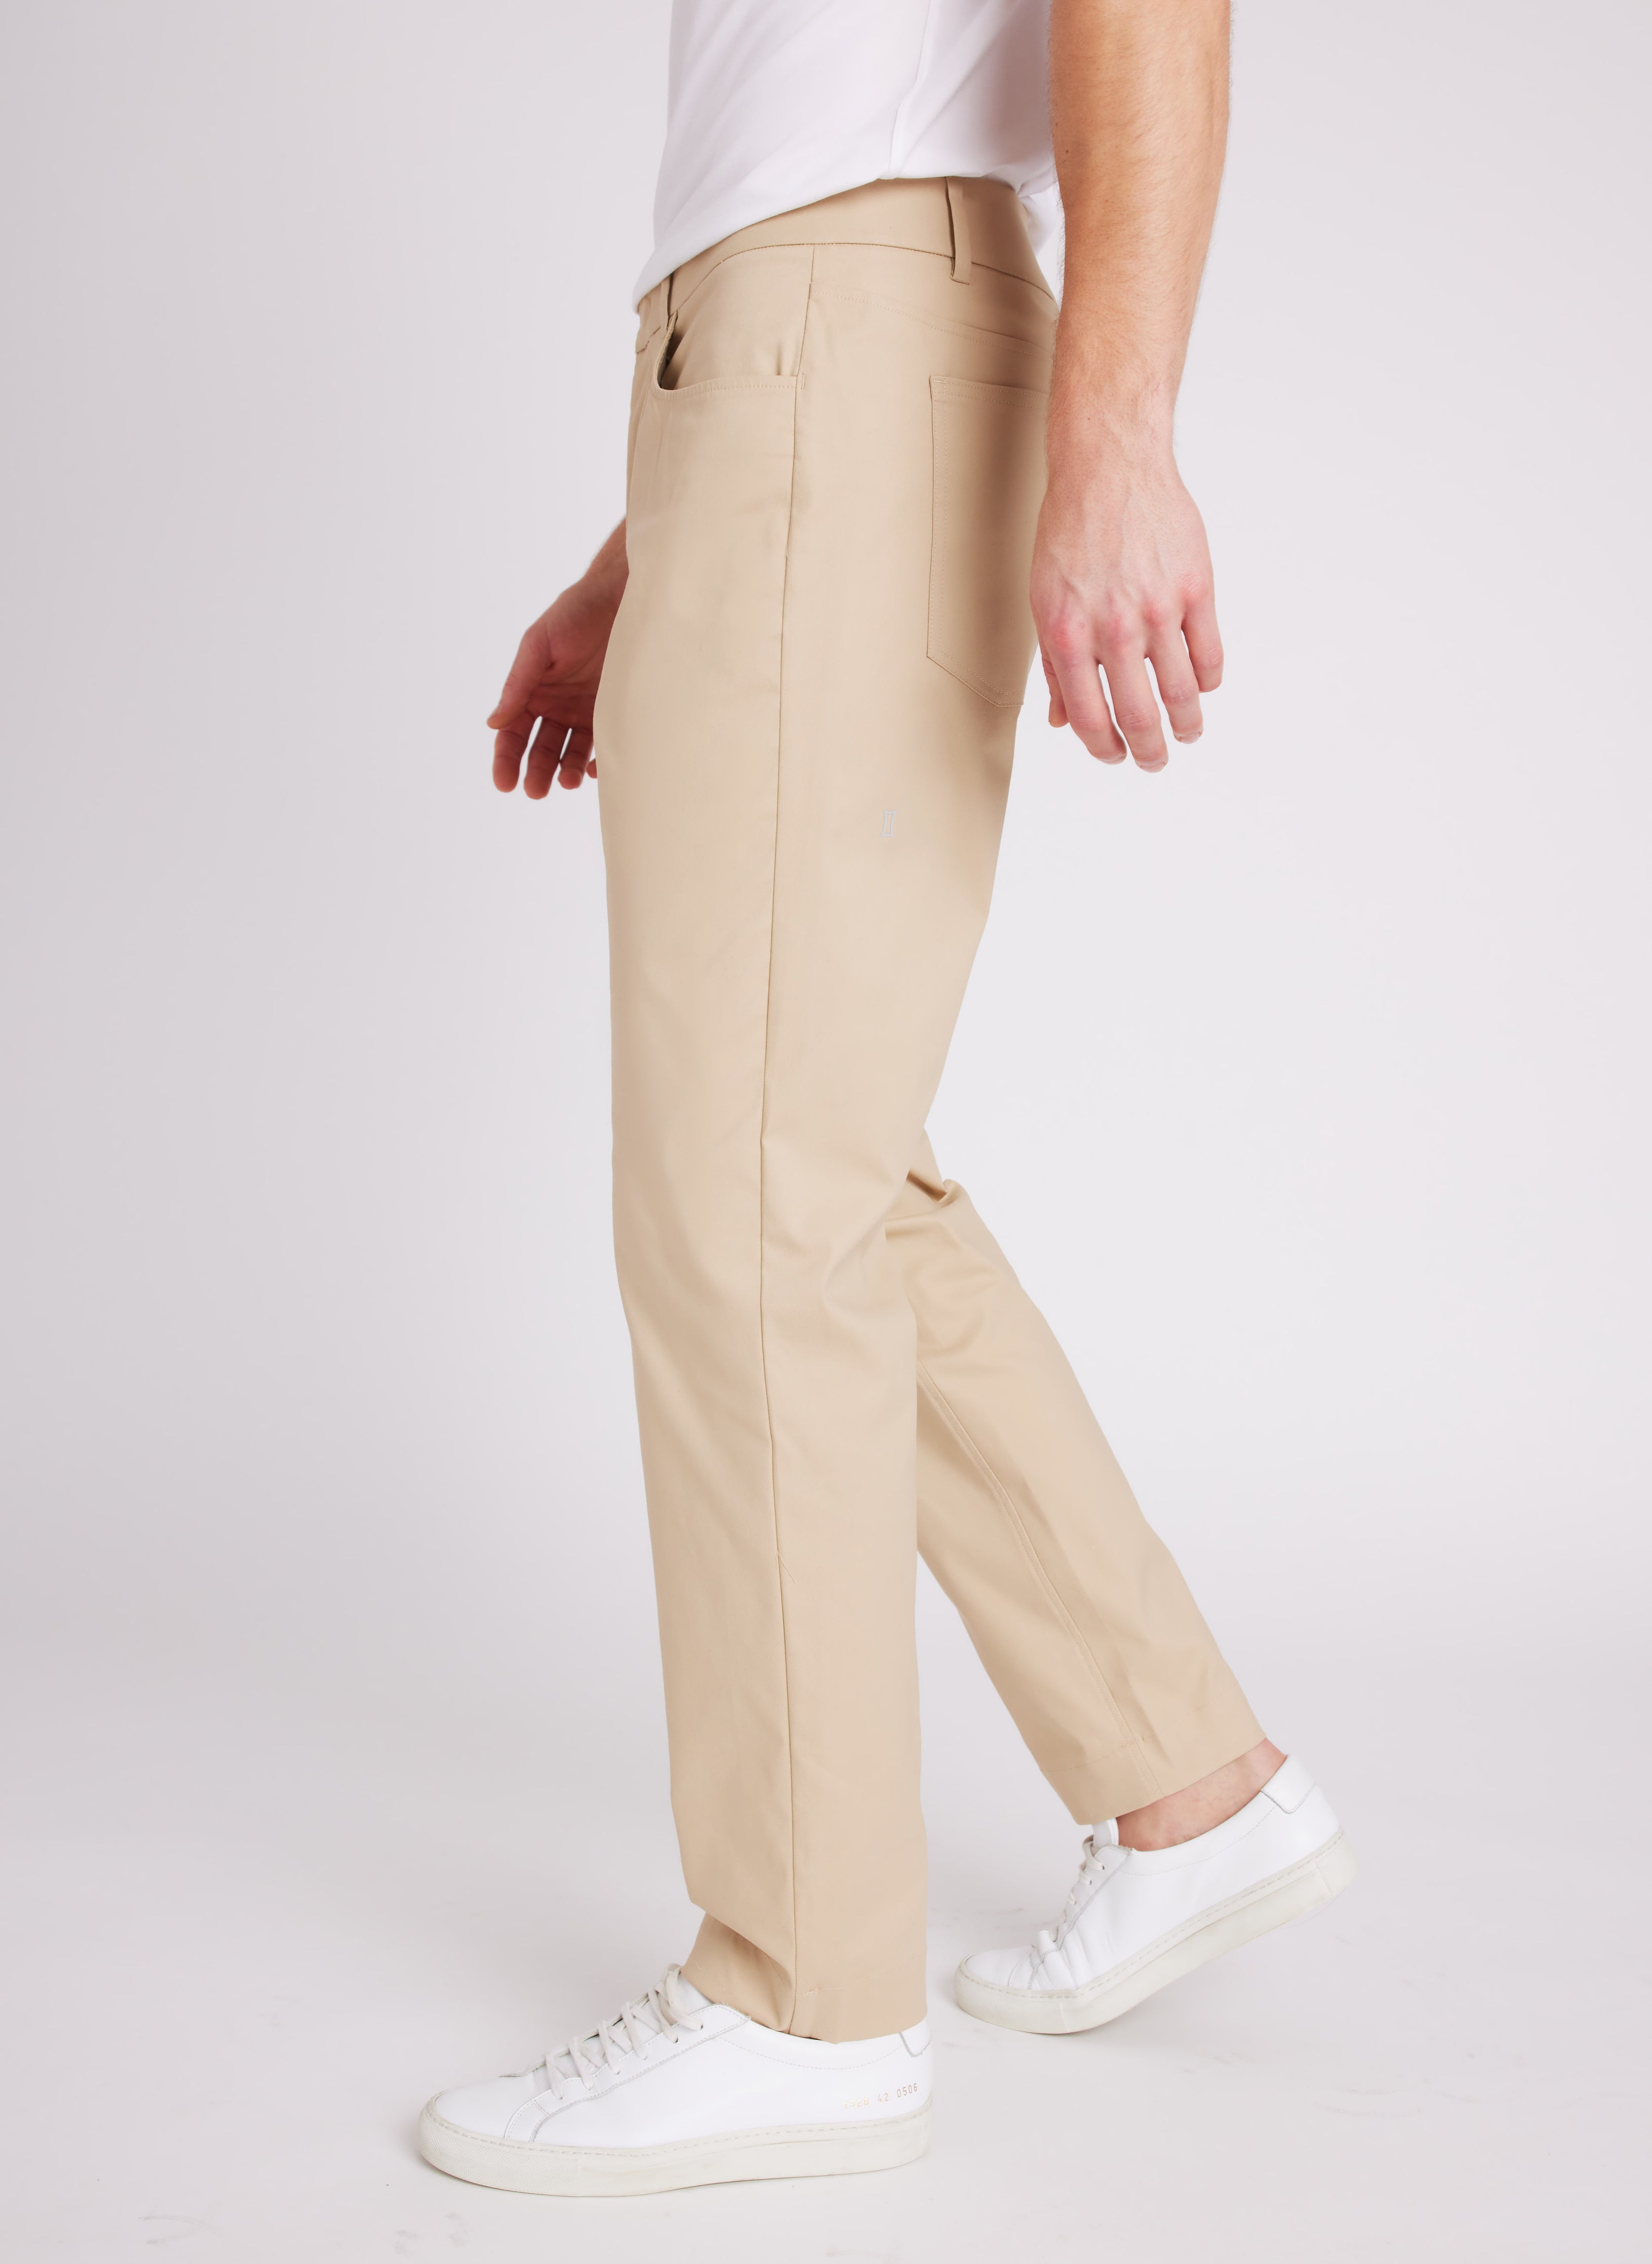 Kit and Ace — Navigator 5 Pocket Pants Standard Fit